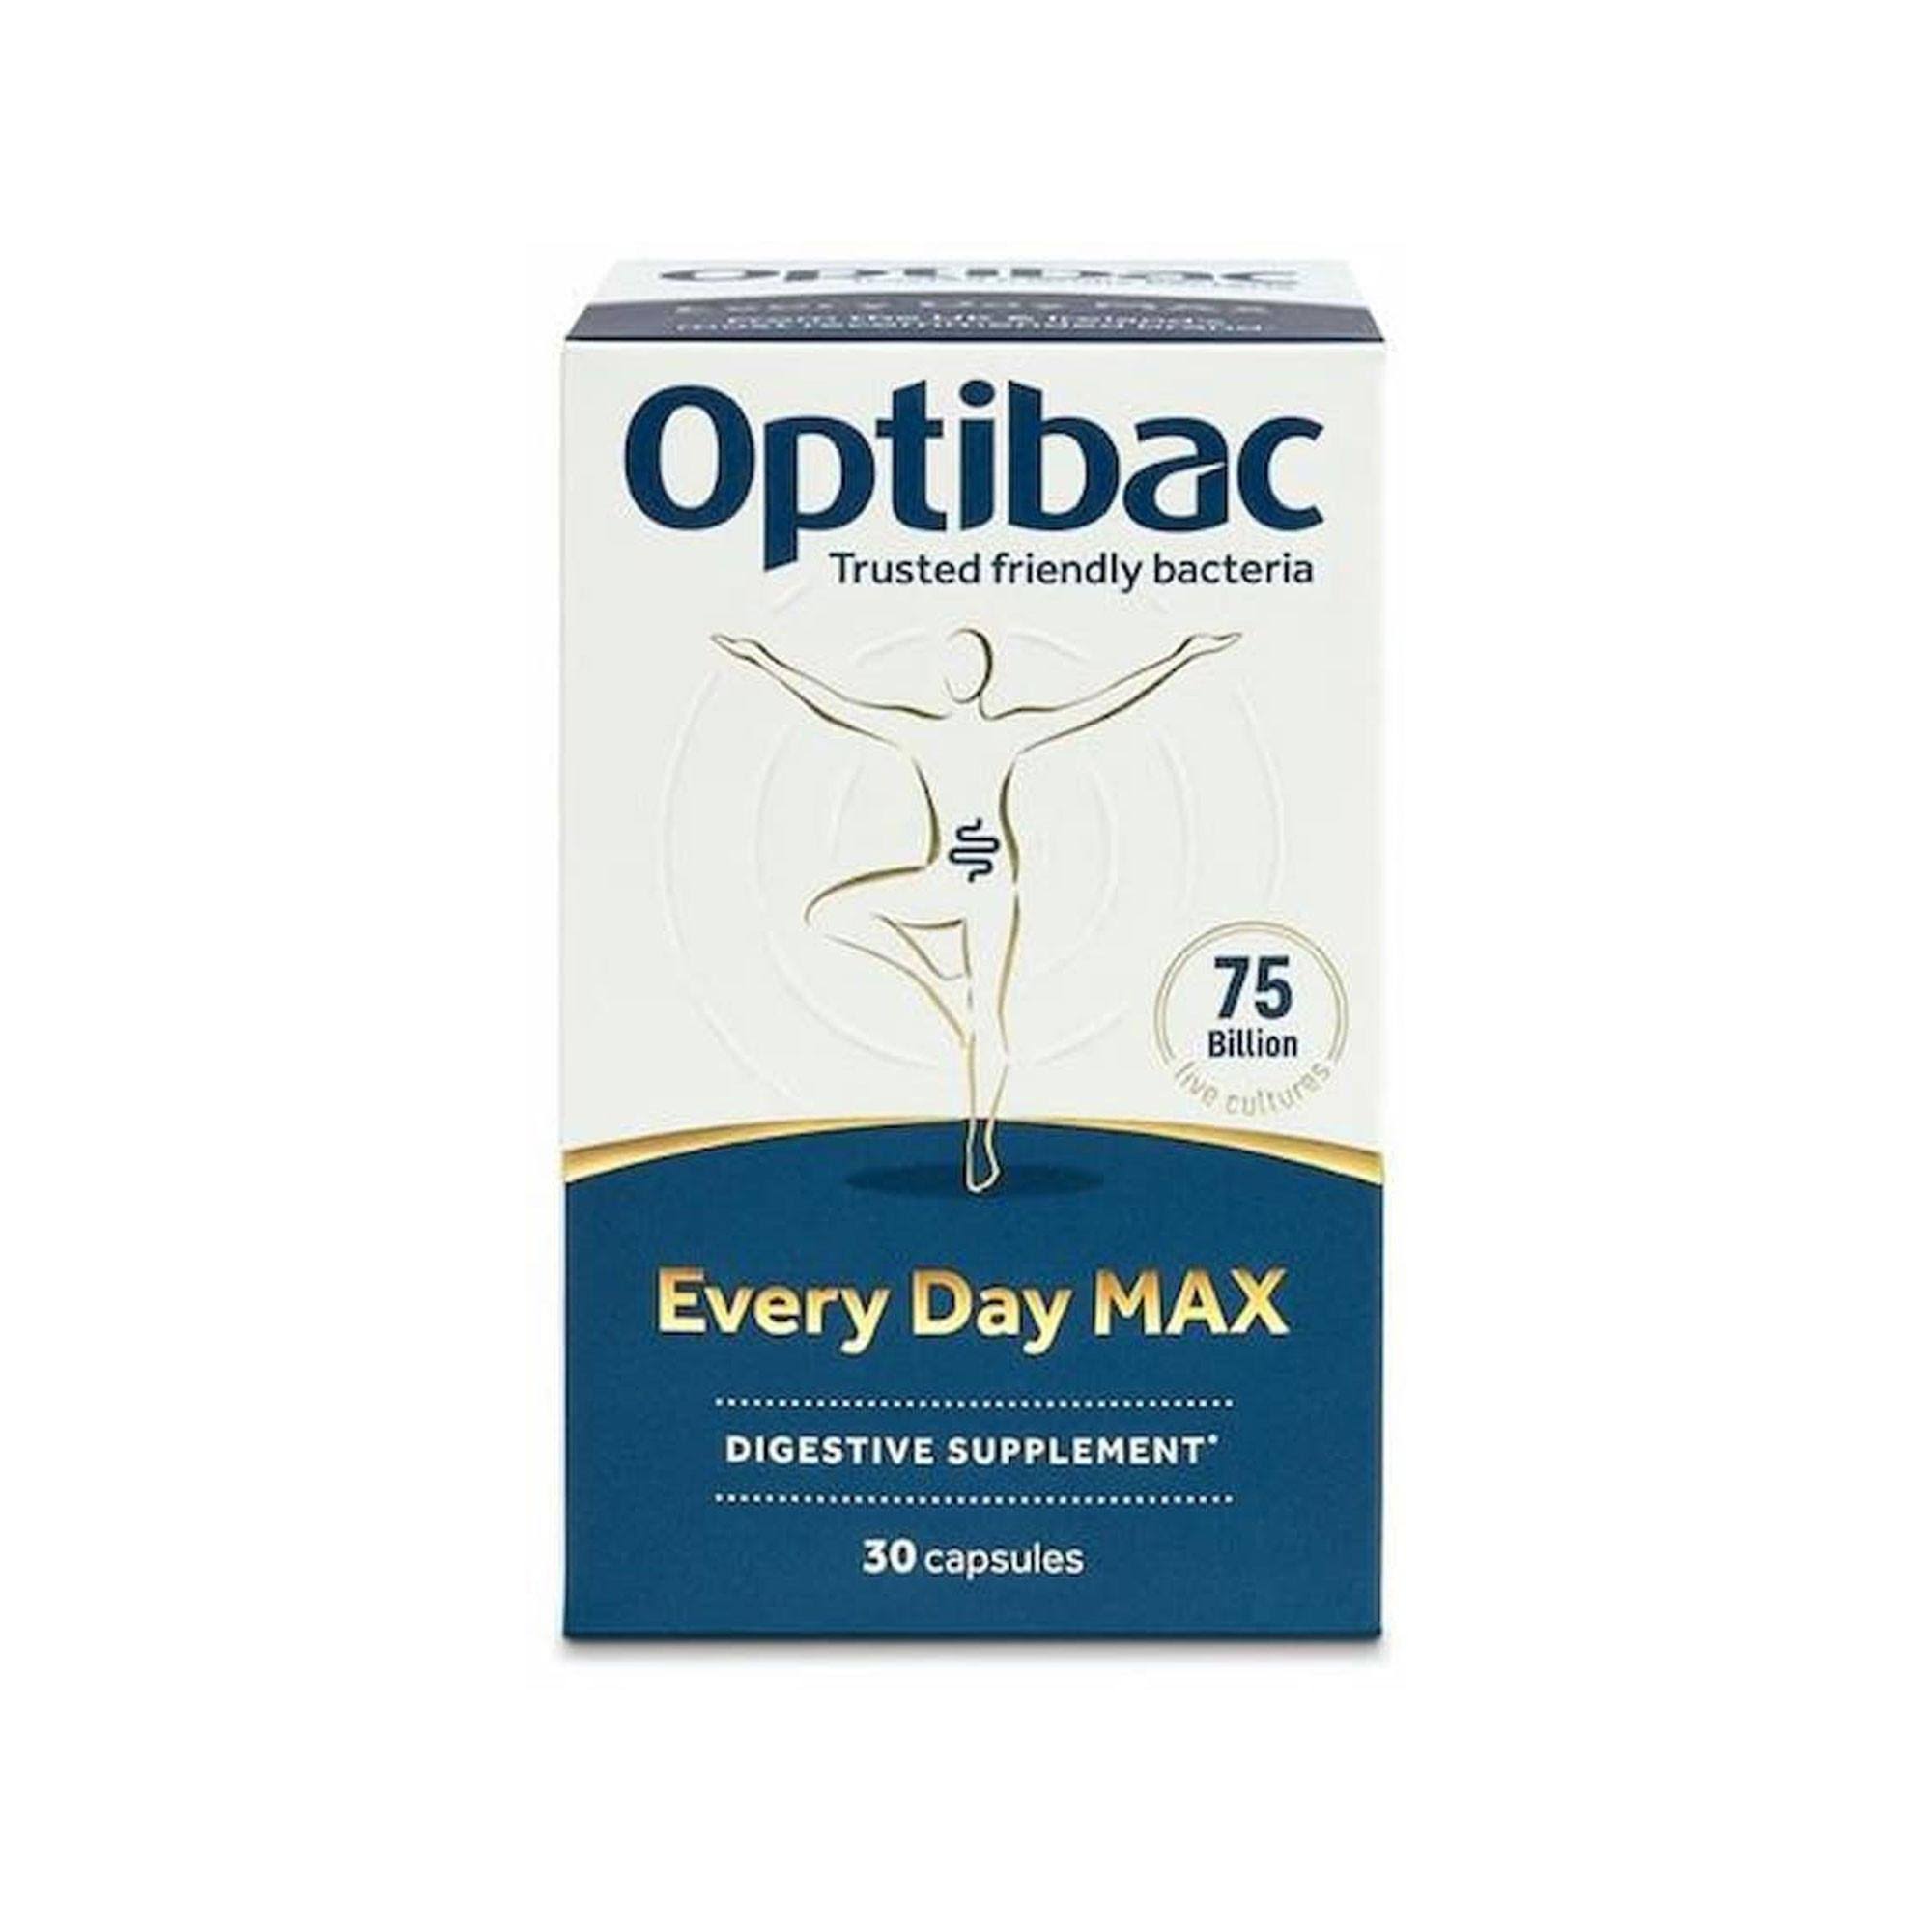 OPTIBAC probiotics For every day MAX 30 capsules